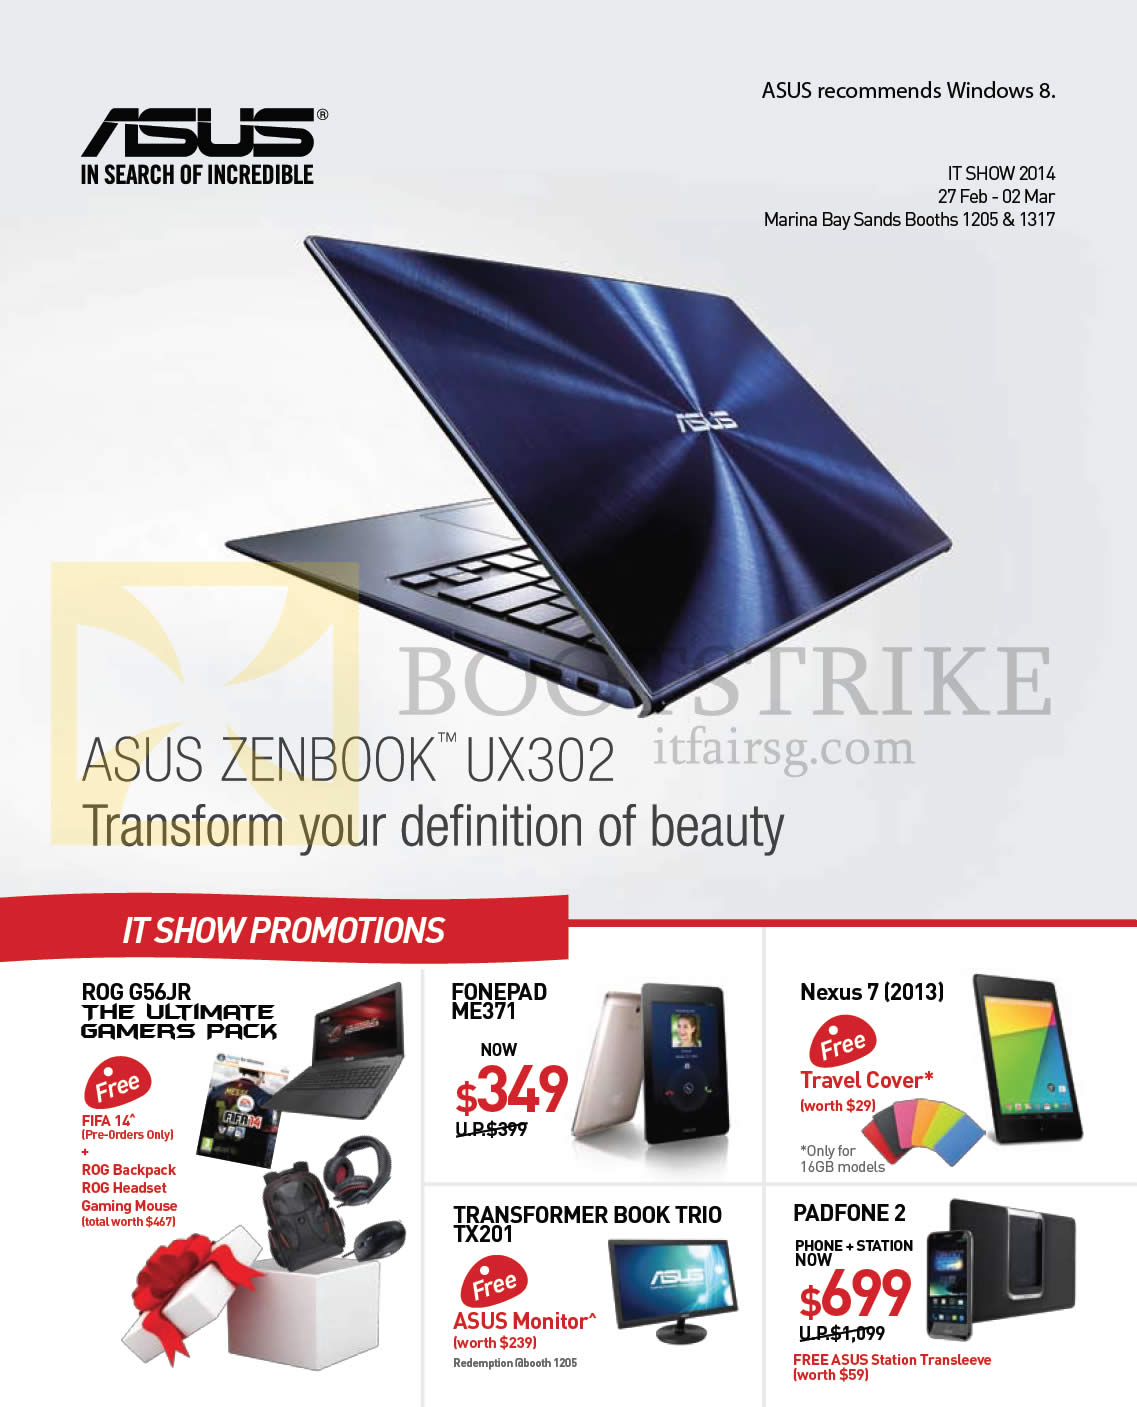 IT SHOW 2014 price list image brochure of ASUS Notebook Zenbook UX302, IT Show Offers